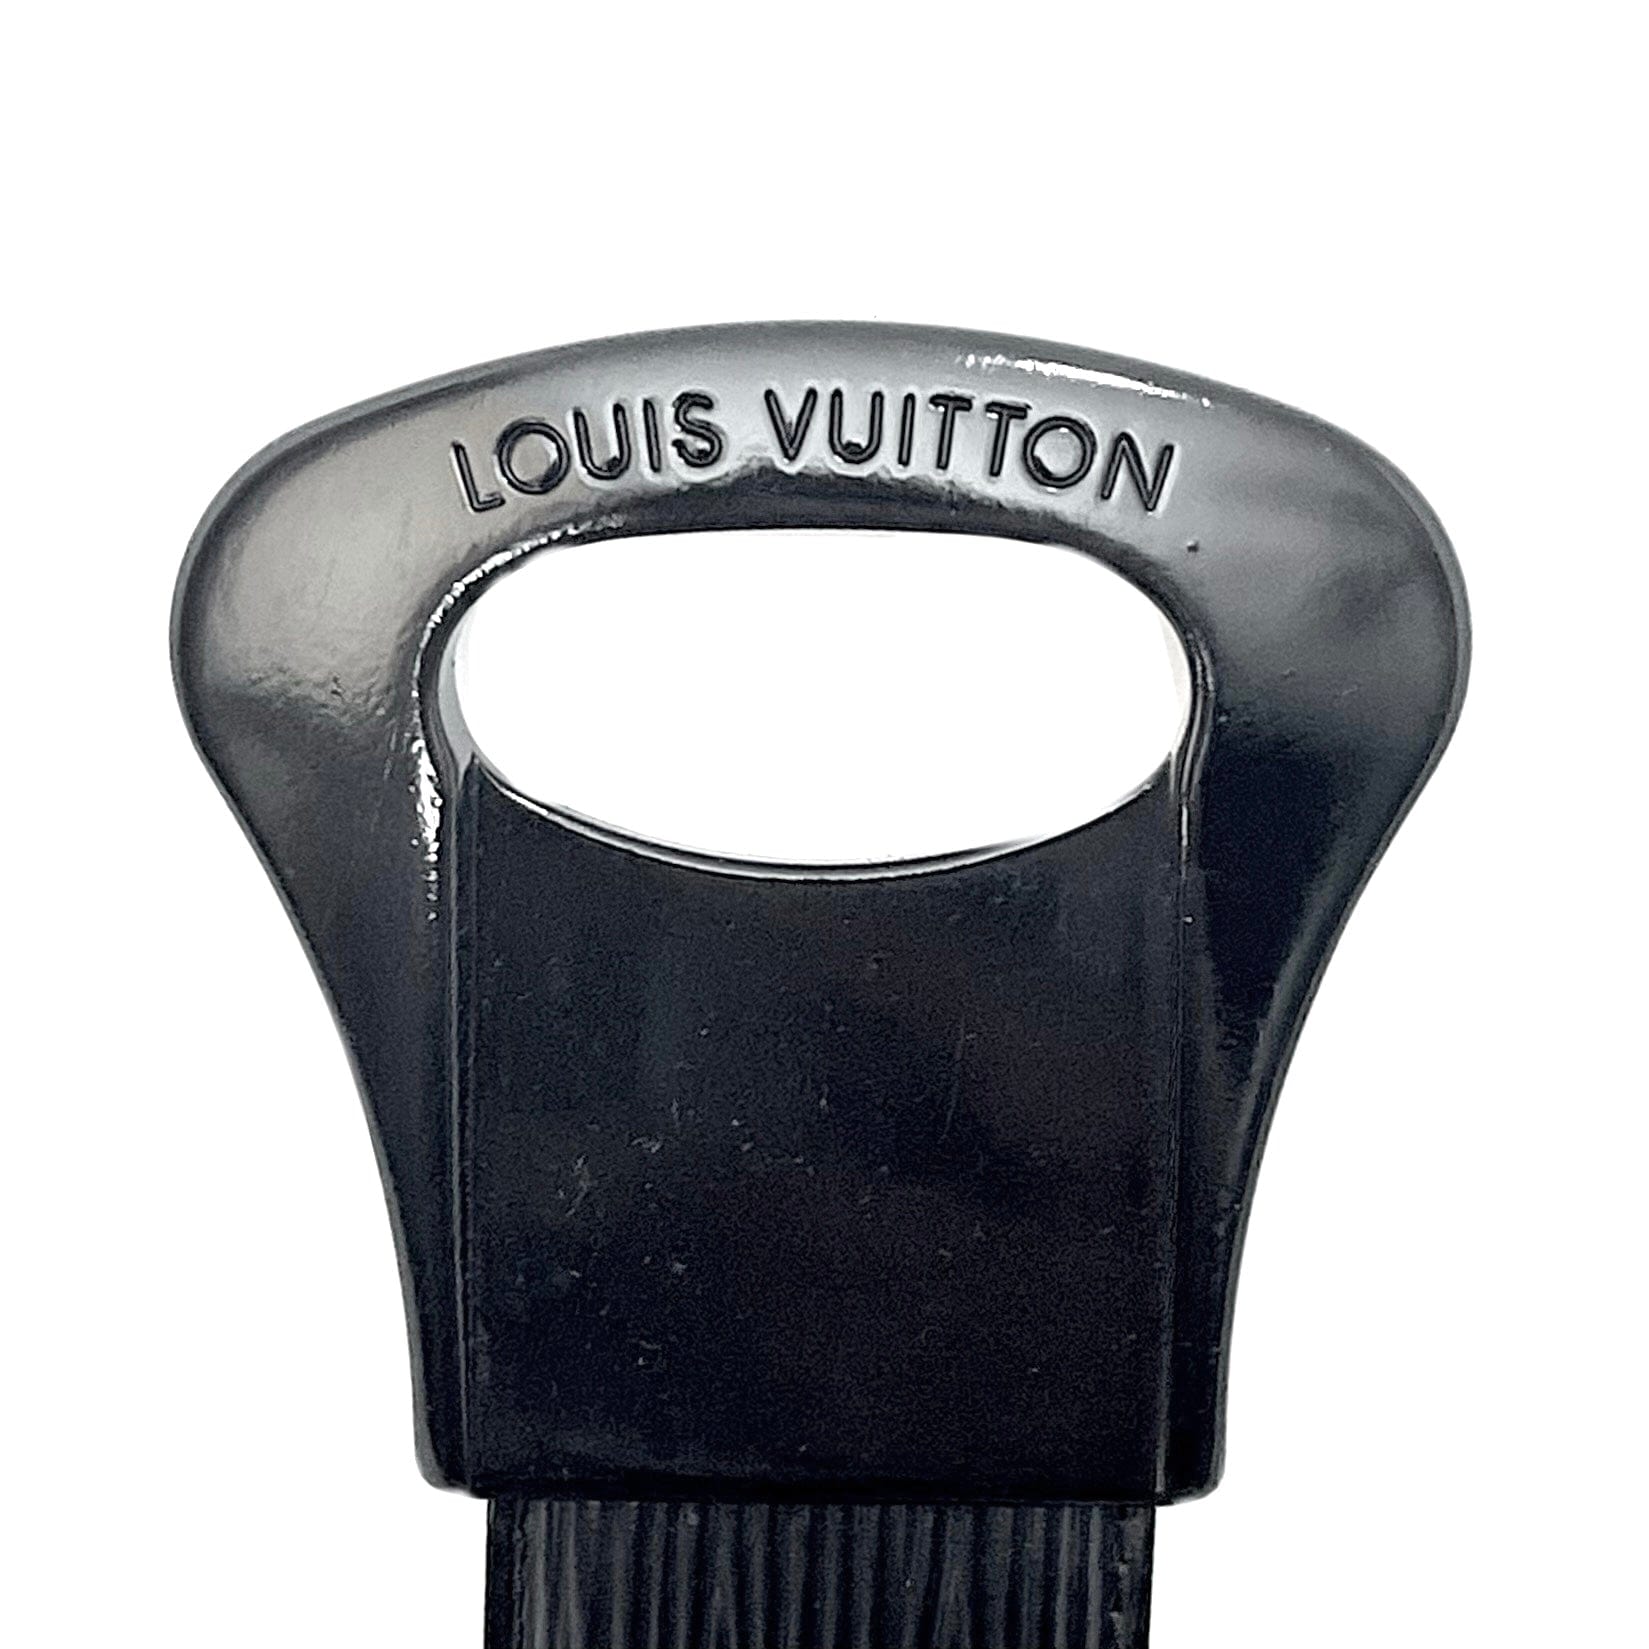 Louis Vuitton 85/34 Red EPI Leather Ceinture Belt Silver Buckle 95lk412s